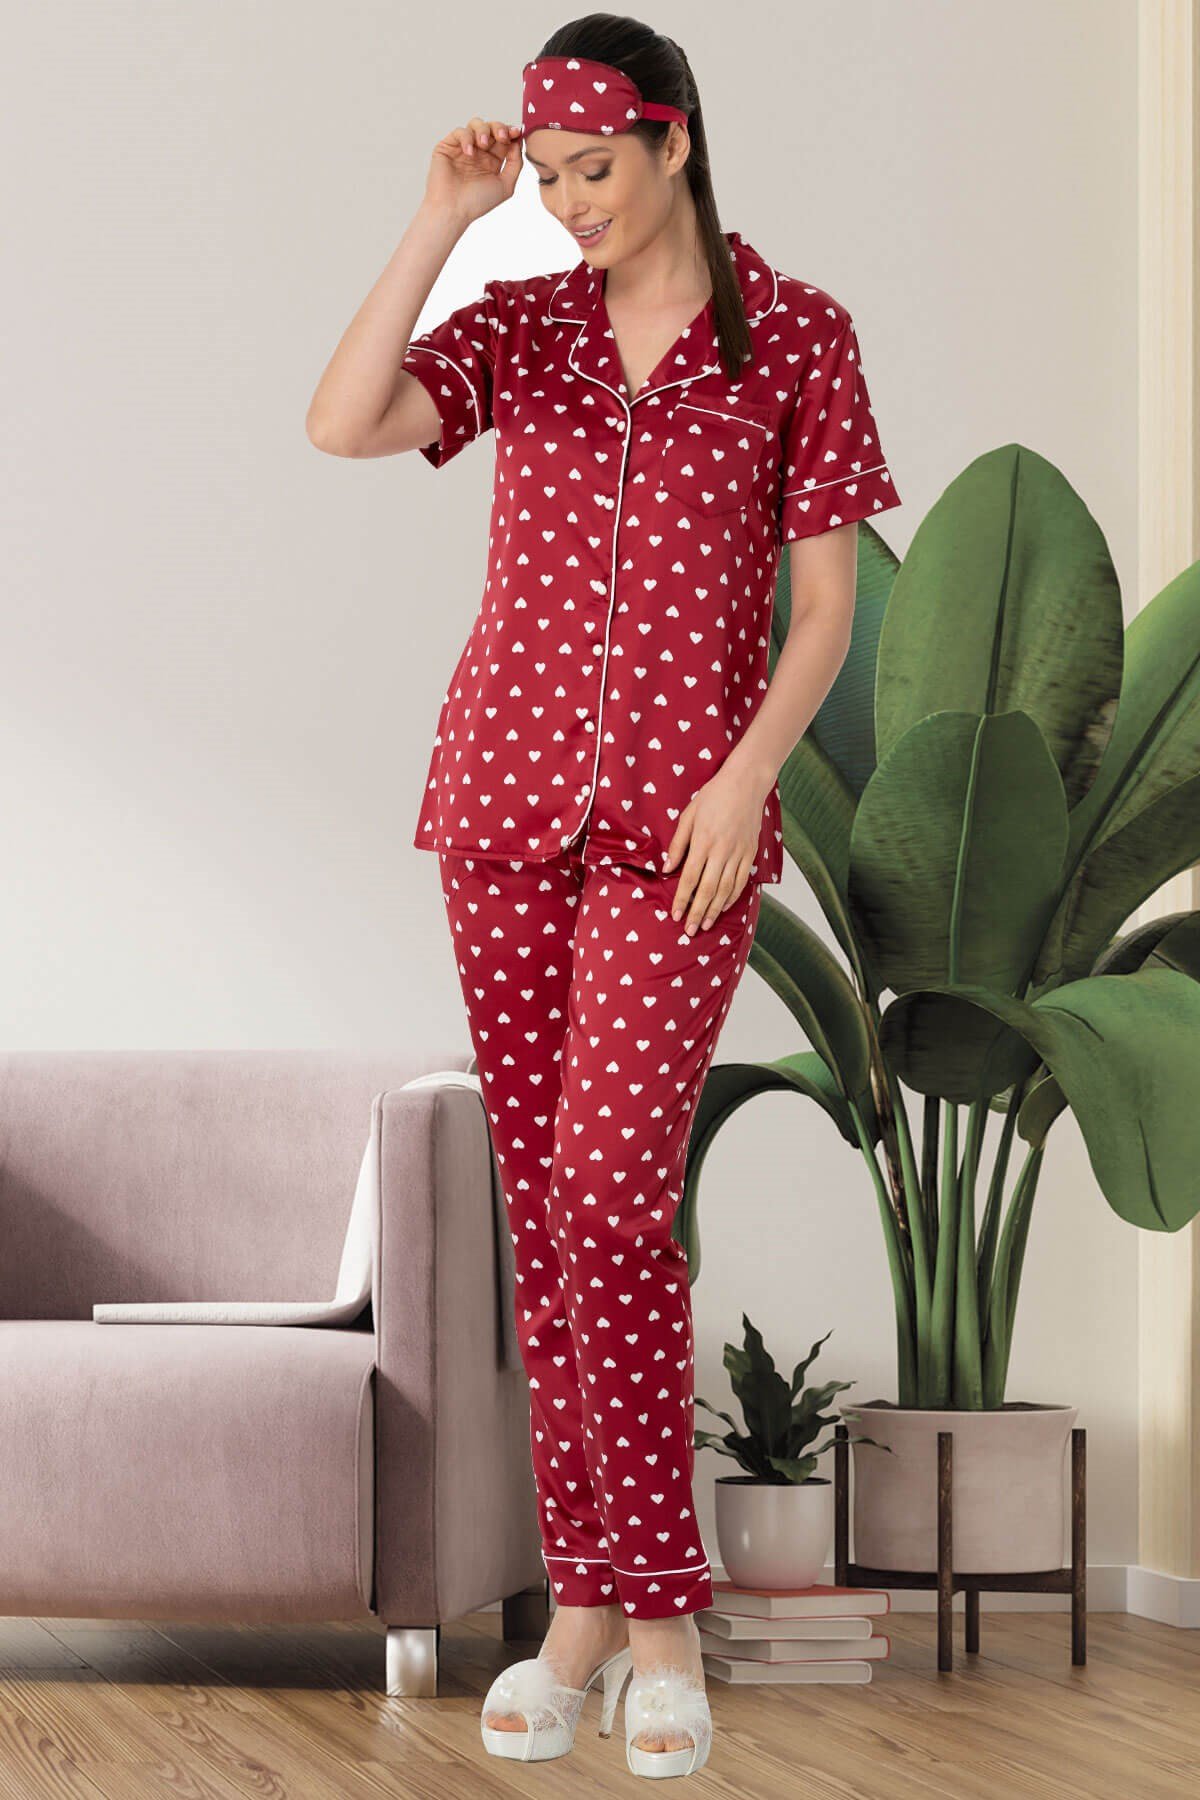 Mecit 5476 Kalp Desenli Kırmızı Saten Pijama Takımı | Mecit Pijama